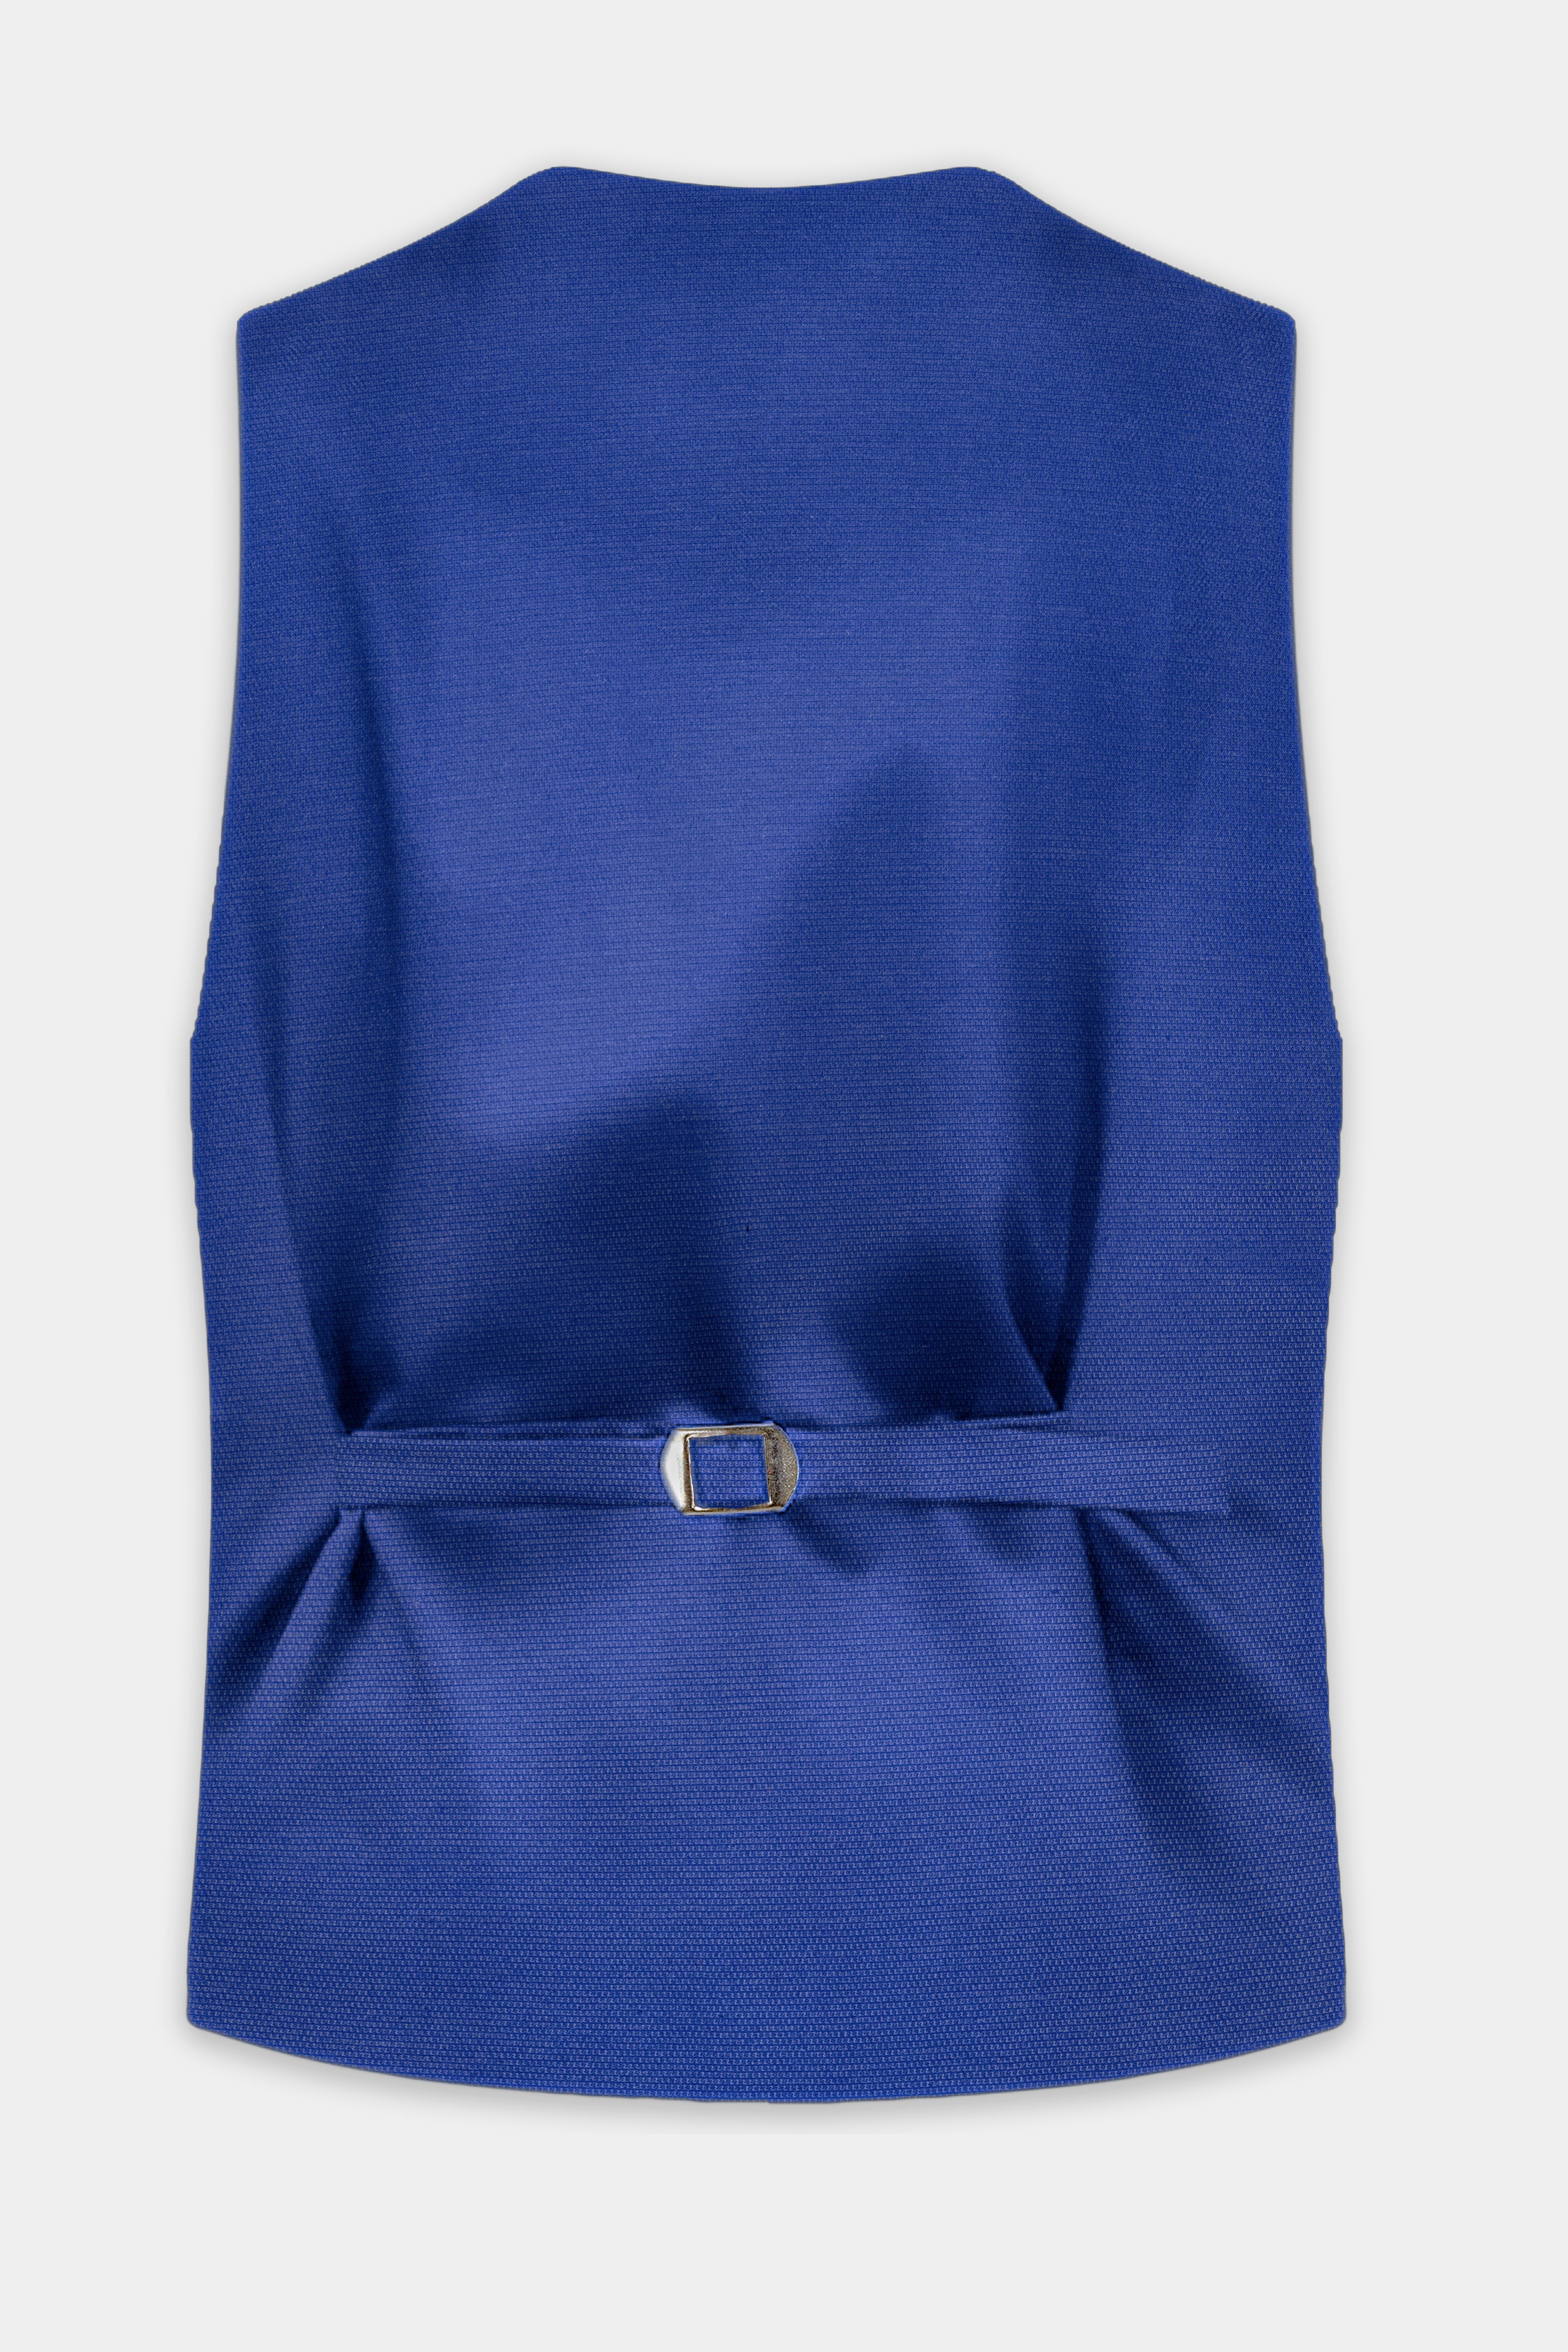 Catalina Blue Dobby Textured Wool Blend Waistcoat